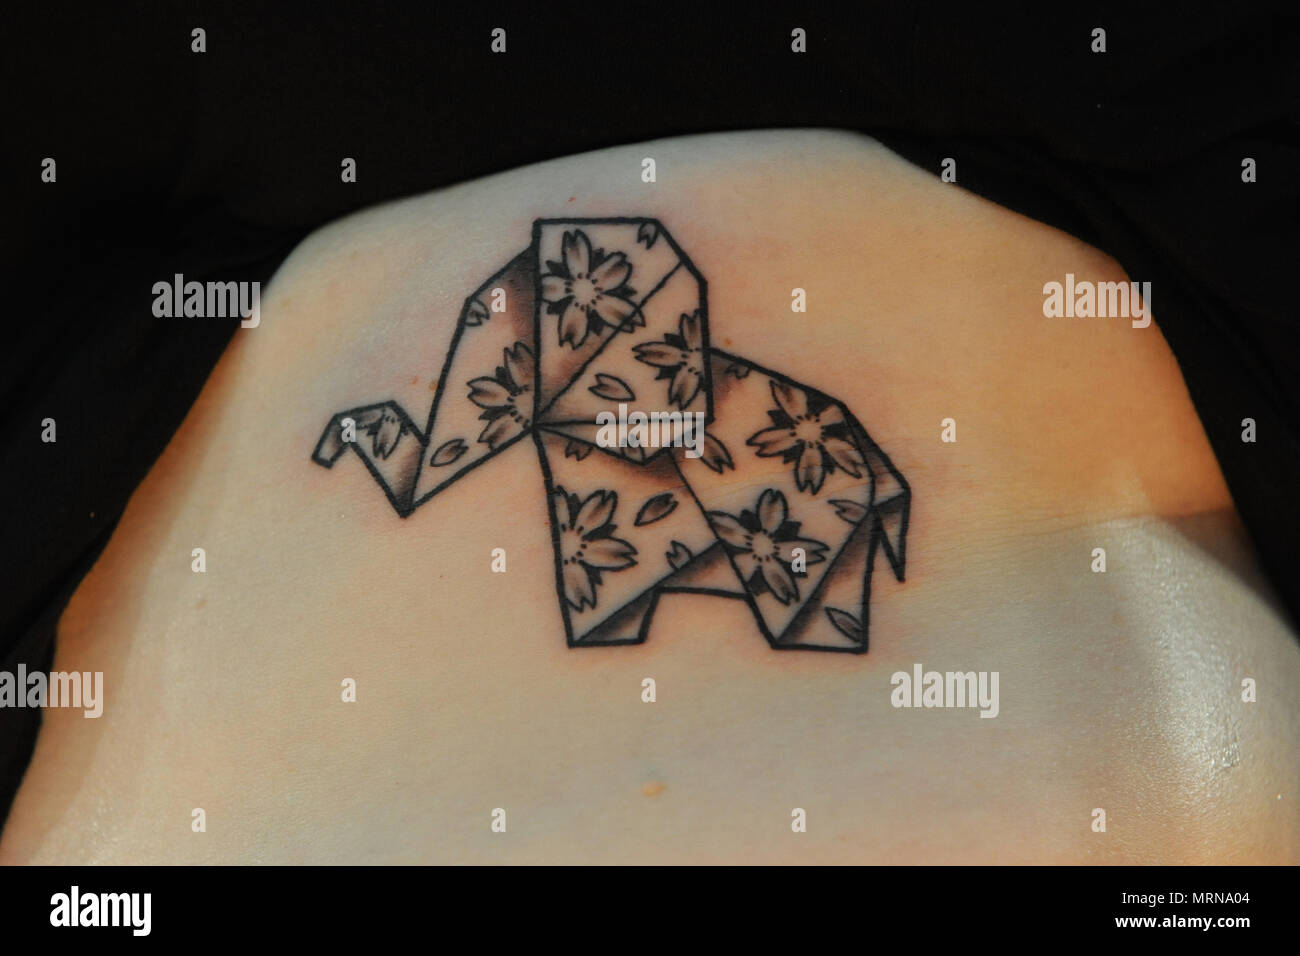 Elephant Origami Tattoo  Creative tattoos Elephant tattoos Tattoos